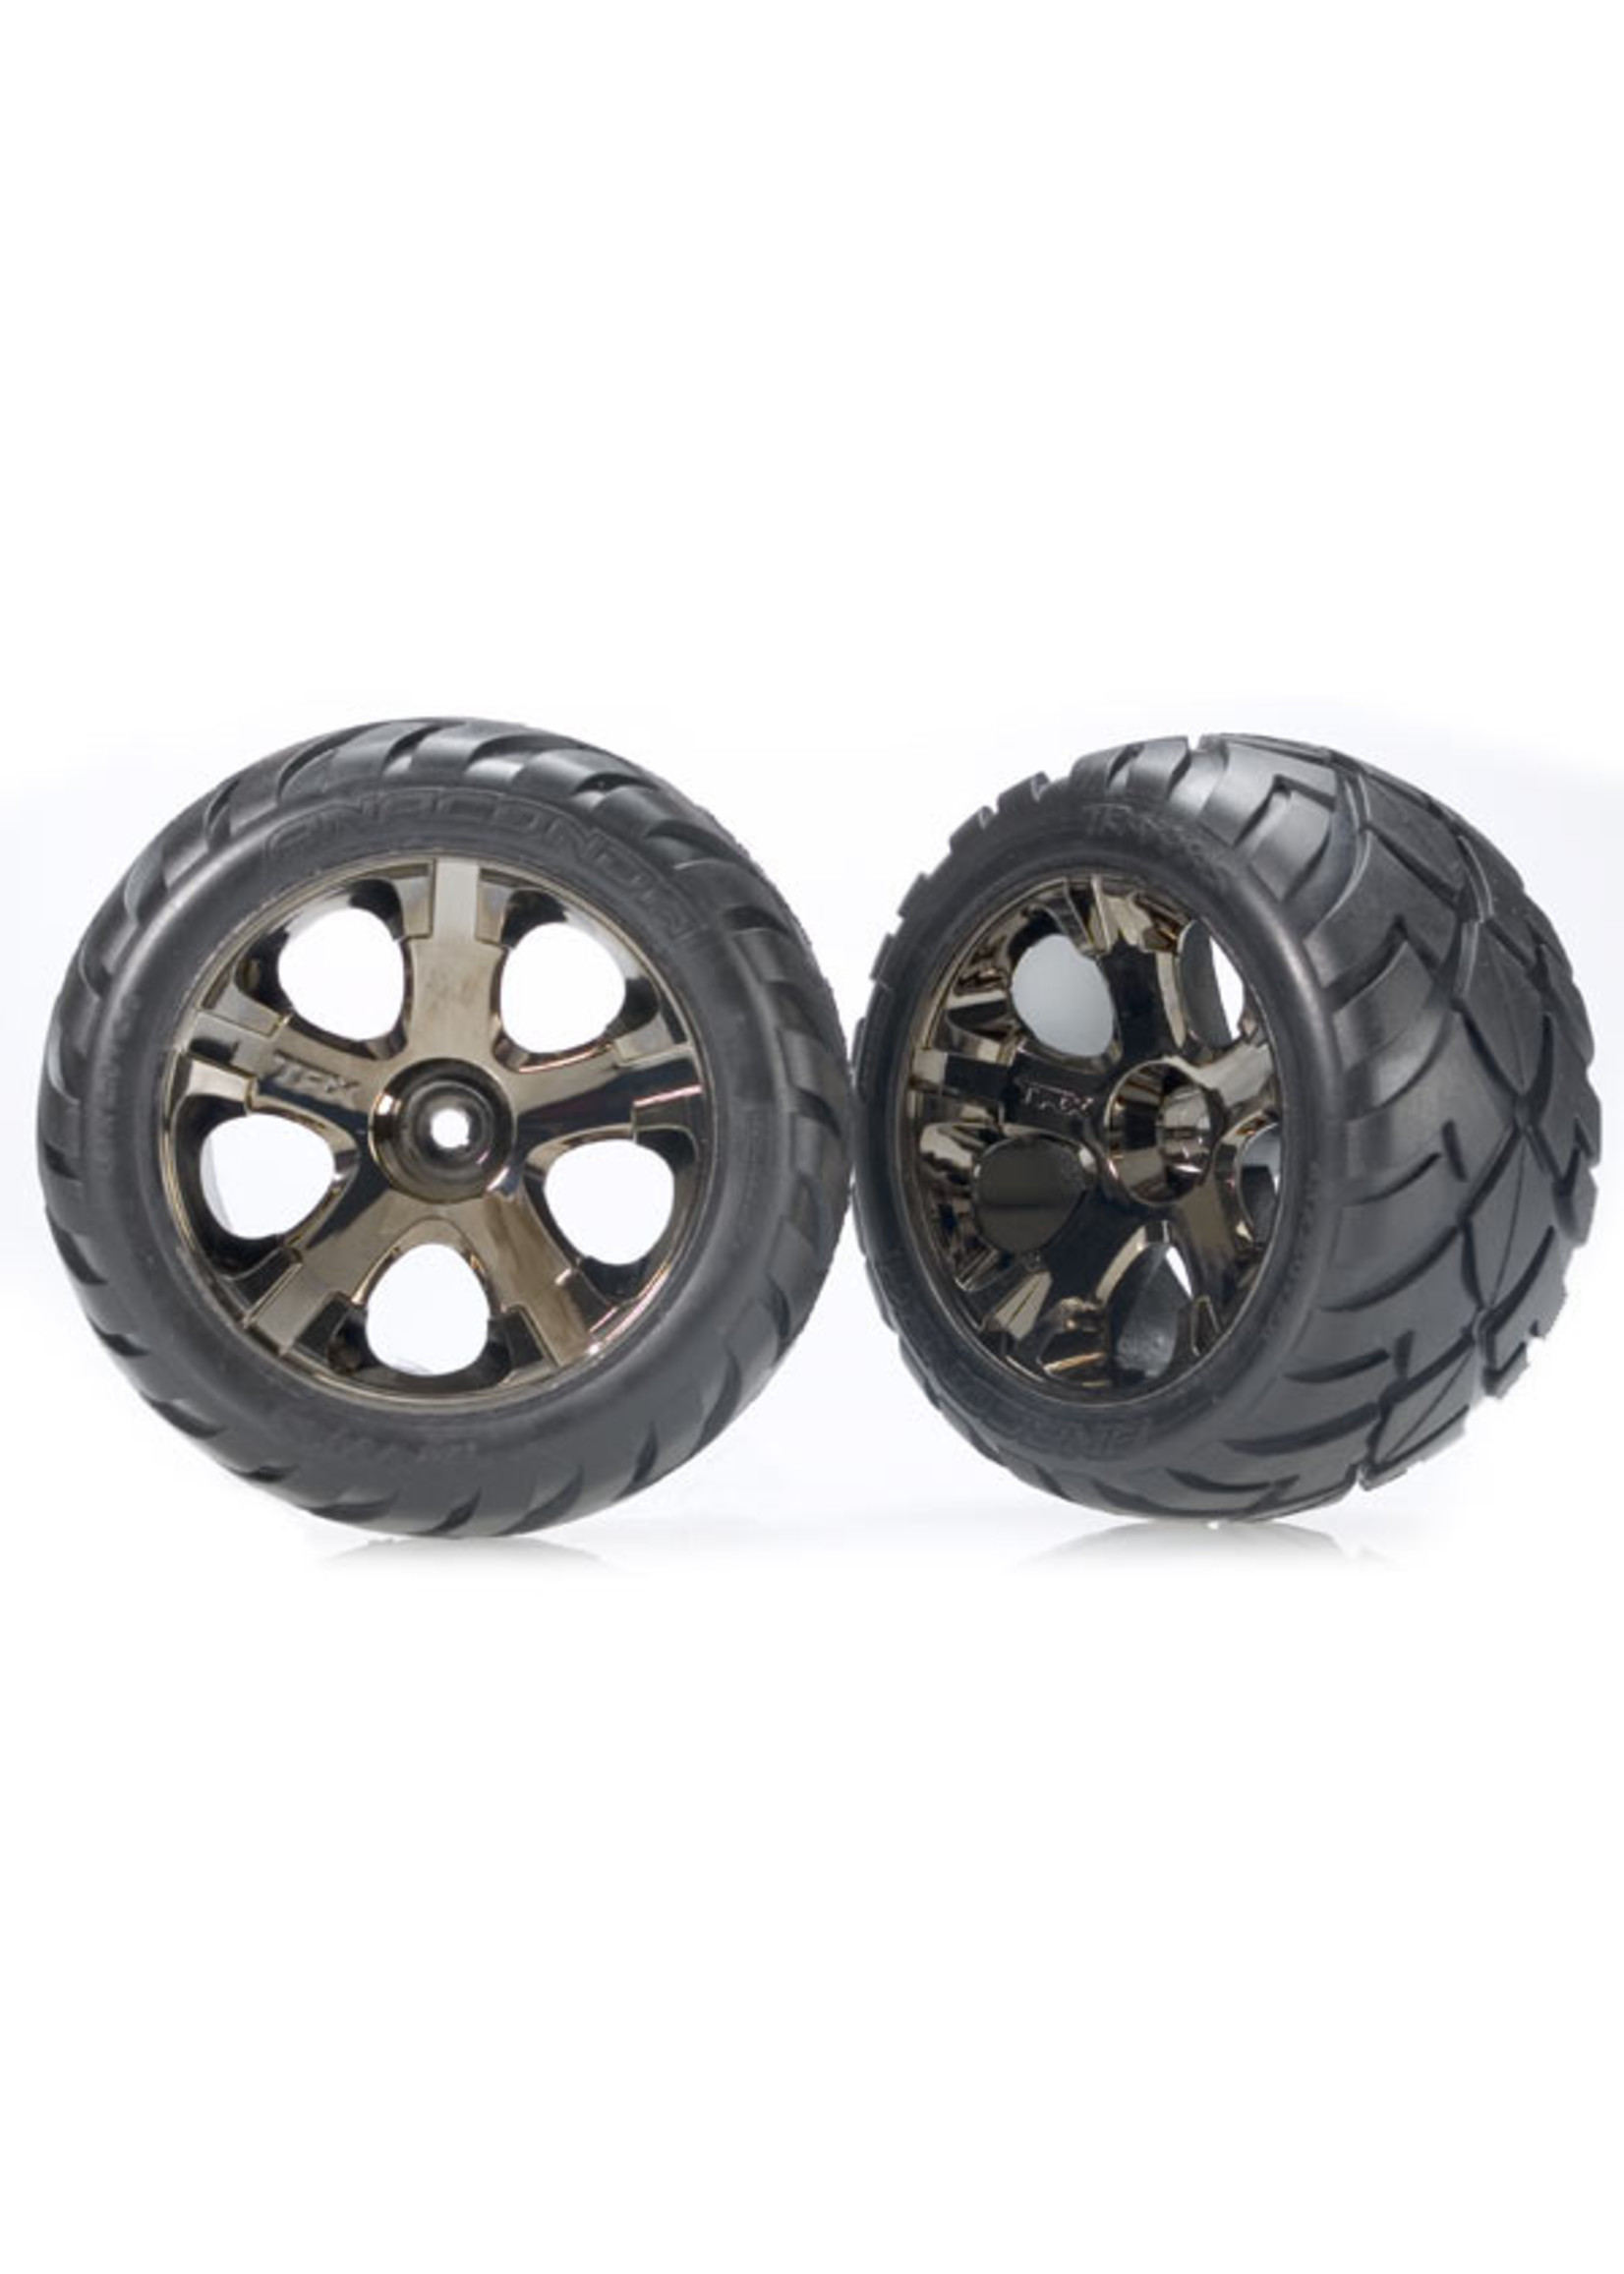 Traxxas 3776A - All-Star Black Chrome Wheels / Anaconda Tires